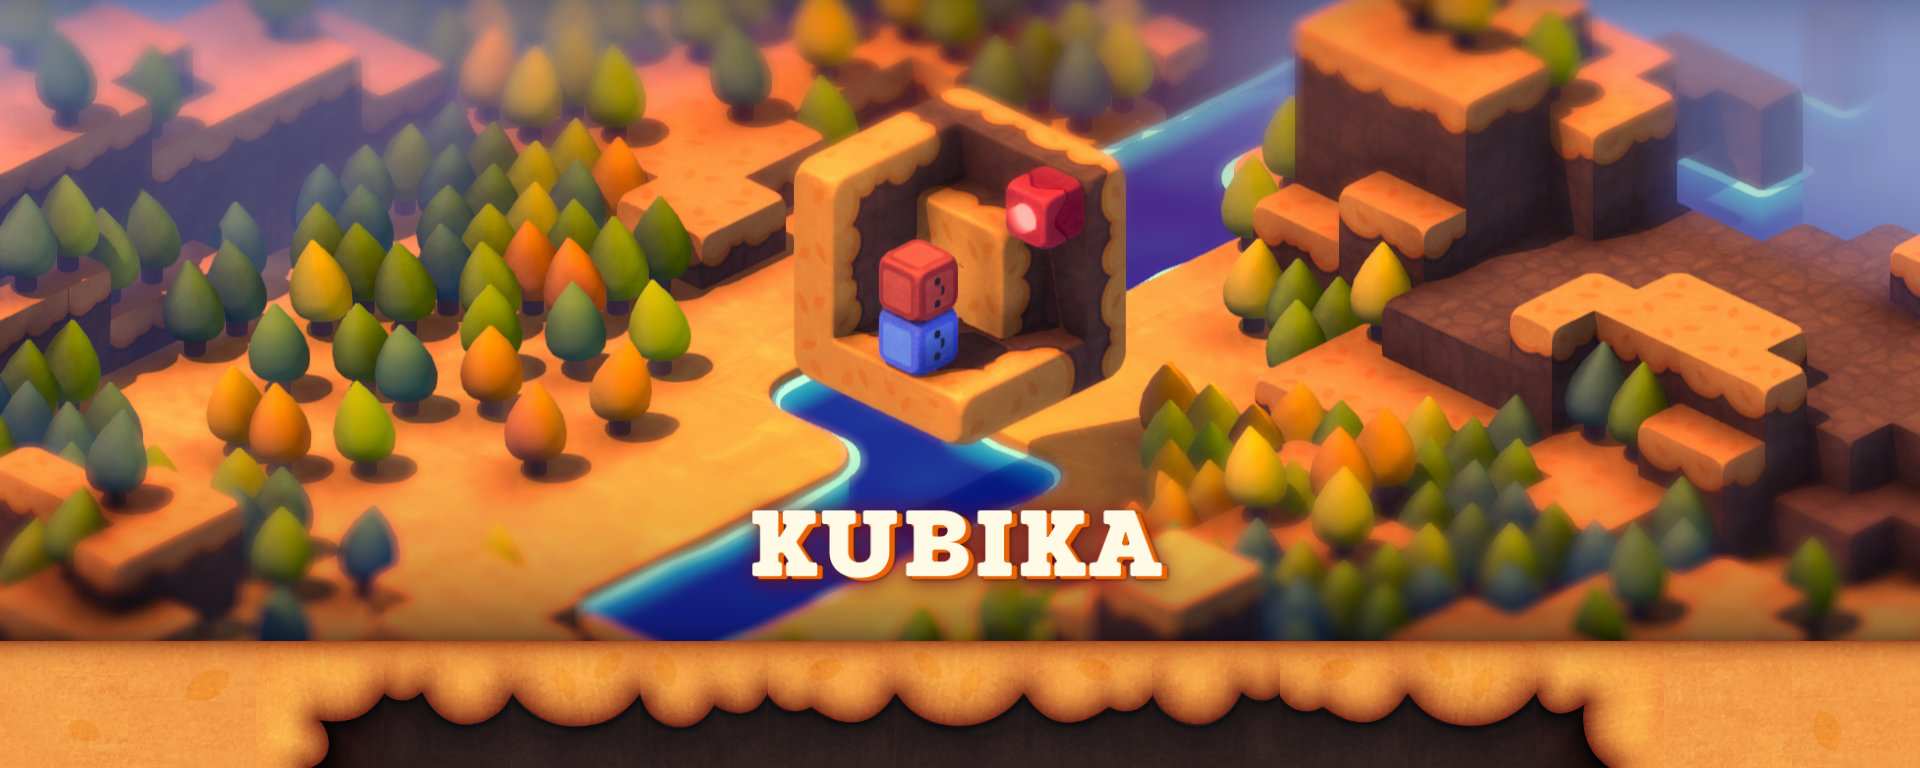 Kubika : A Cube Story